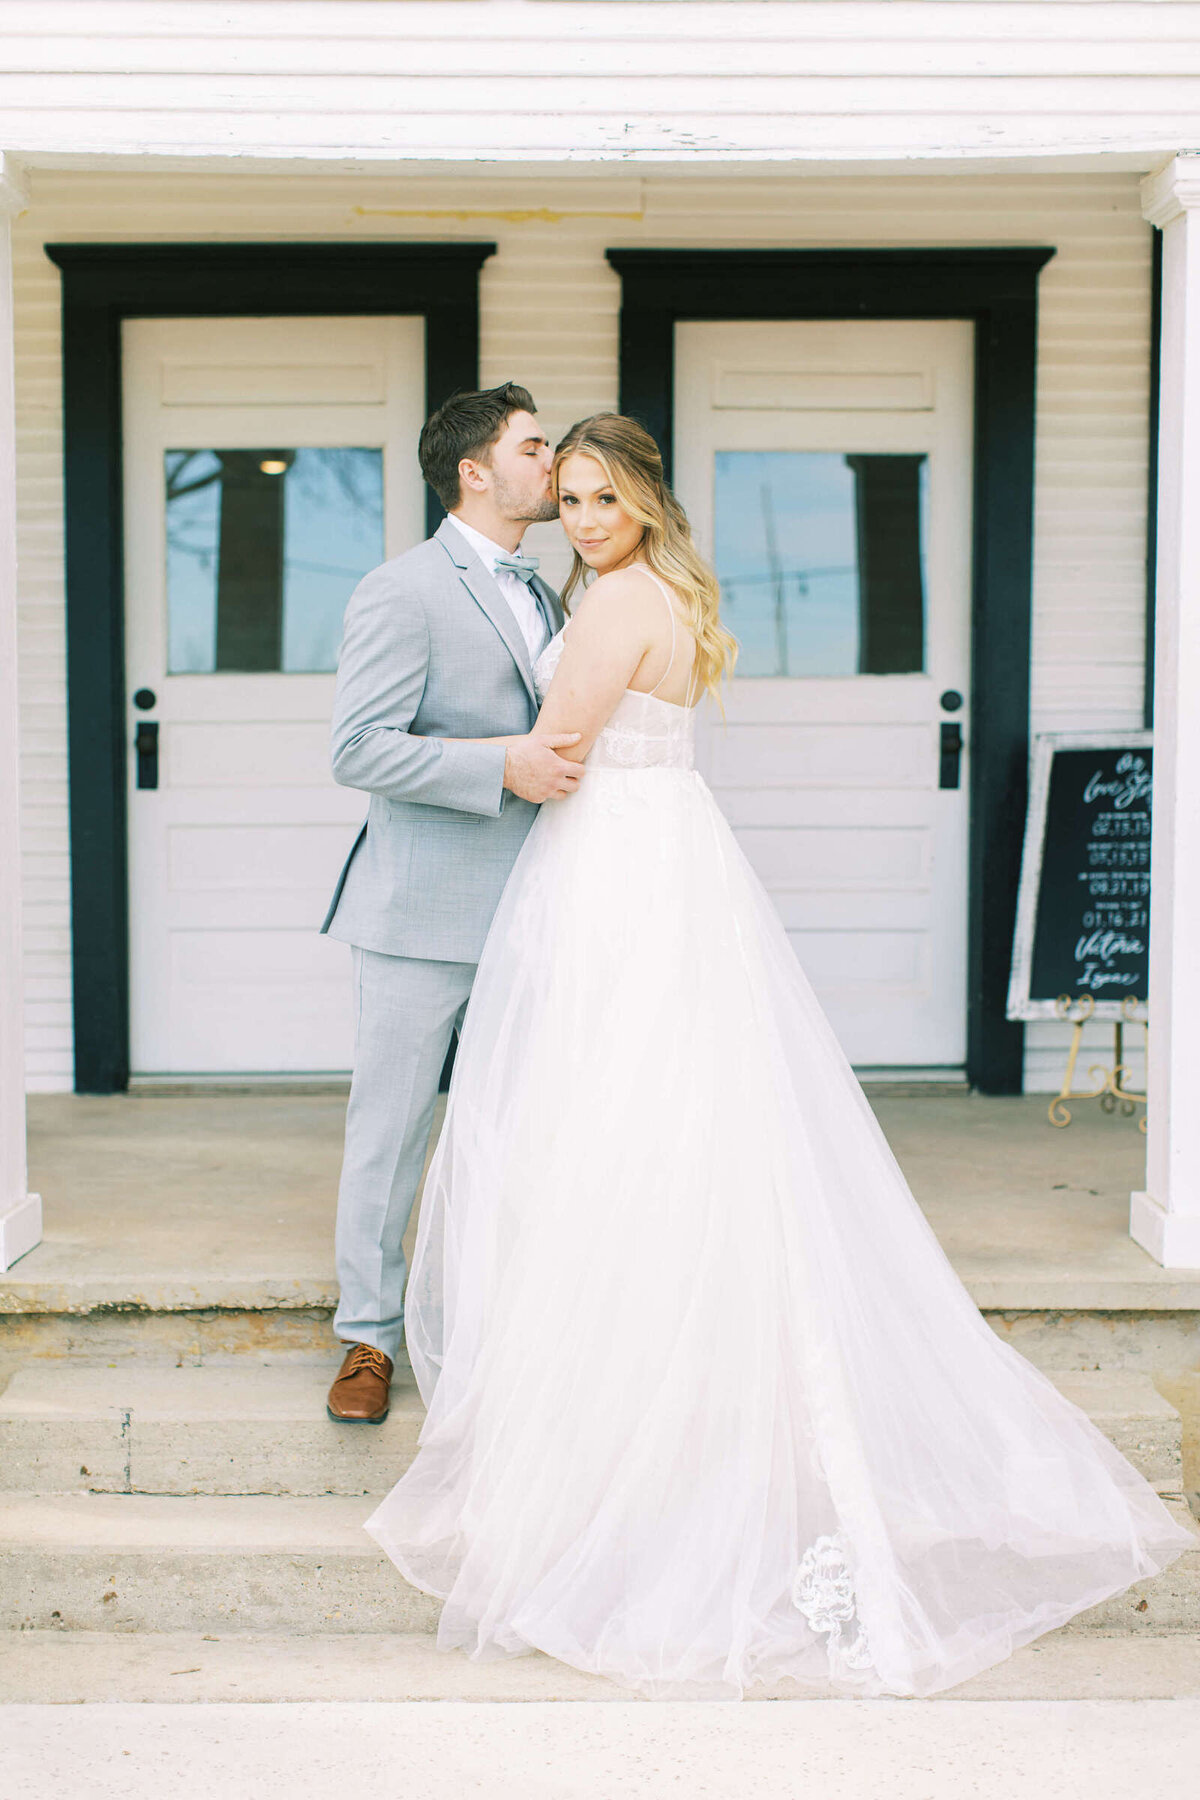 Groom kisses bride on the forehead at rustic wedding venue in Denton, Texas